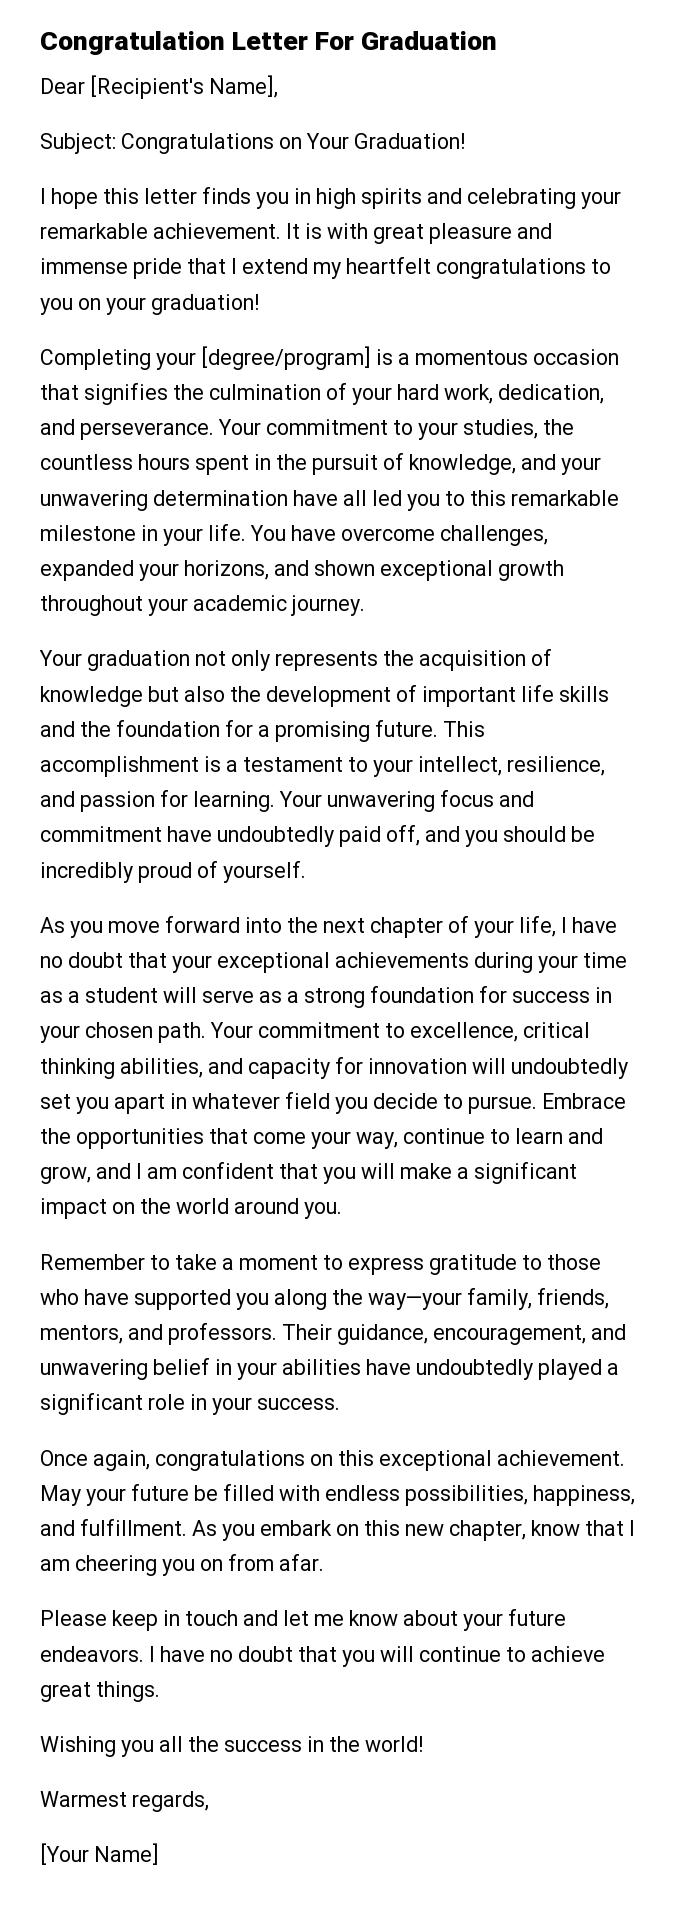 Congratulation Letter For Graduation